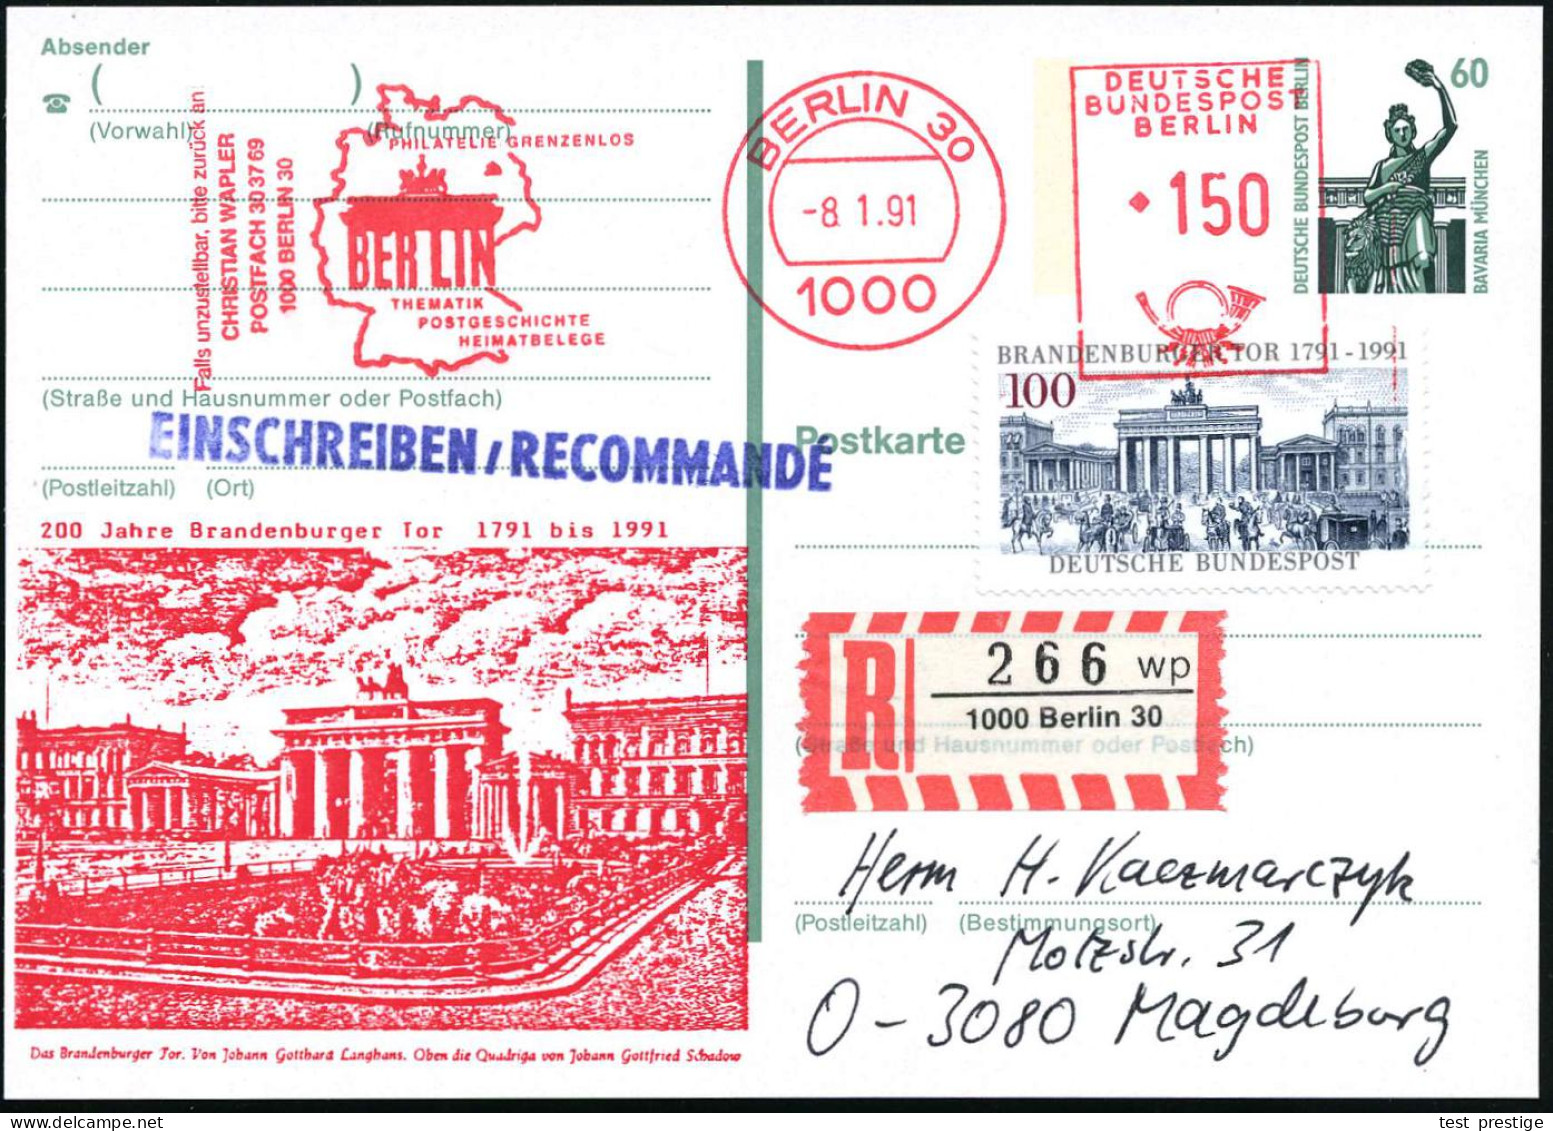 1000 BERLIN 30/ PHILATELIE GRENZENLOS... 1991 (10.8.) AFS Francotyp 150 Pf. = Brandenbg.Tor Als VE Auf Amtl. P 60 Pf. Ba - Denkmäler